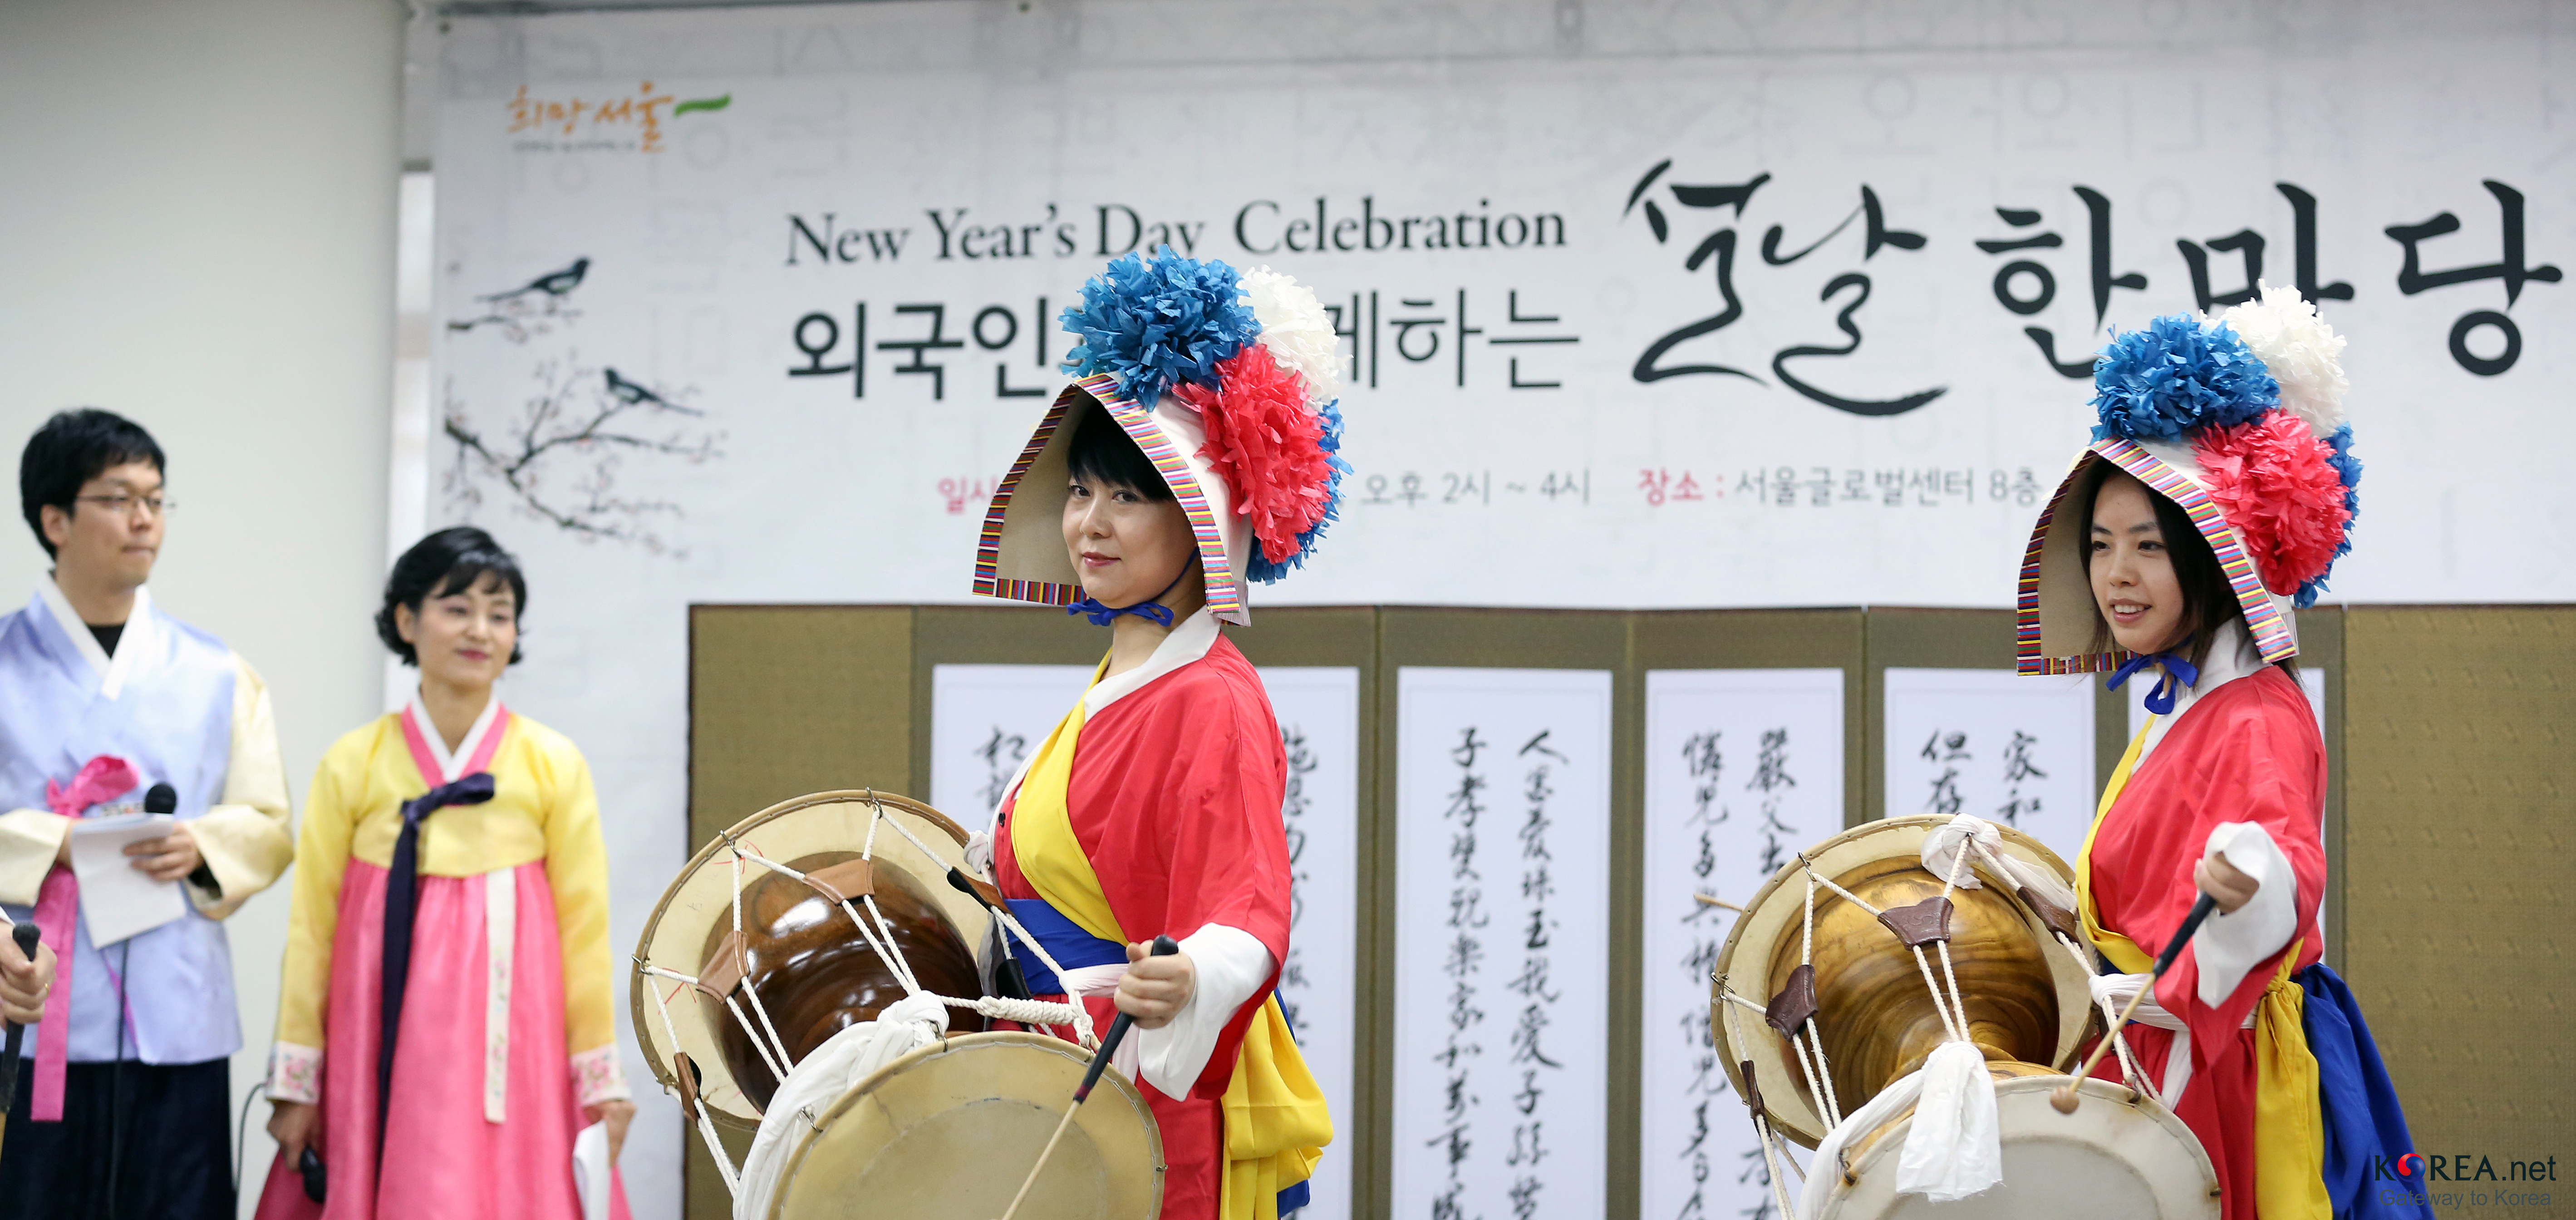 Fajl Kocis Korea Newyear Celebration Globalcenter 05 Jpg Wikipedia